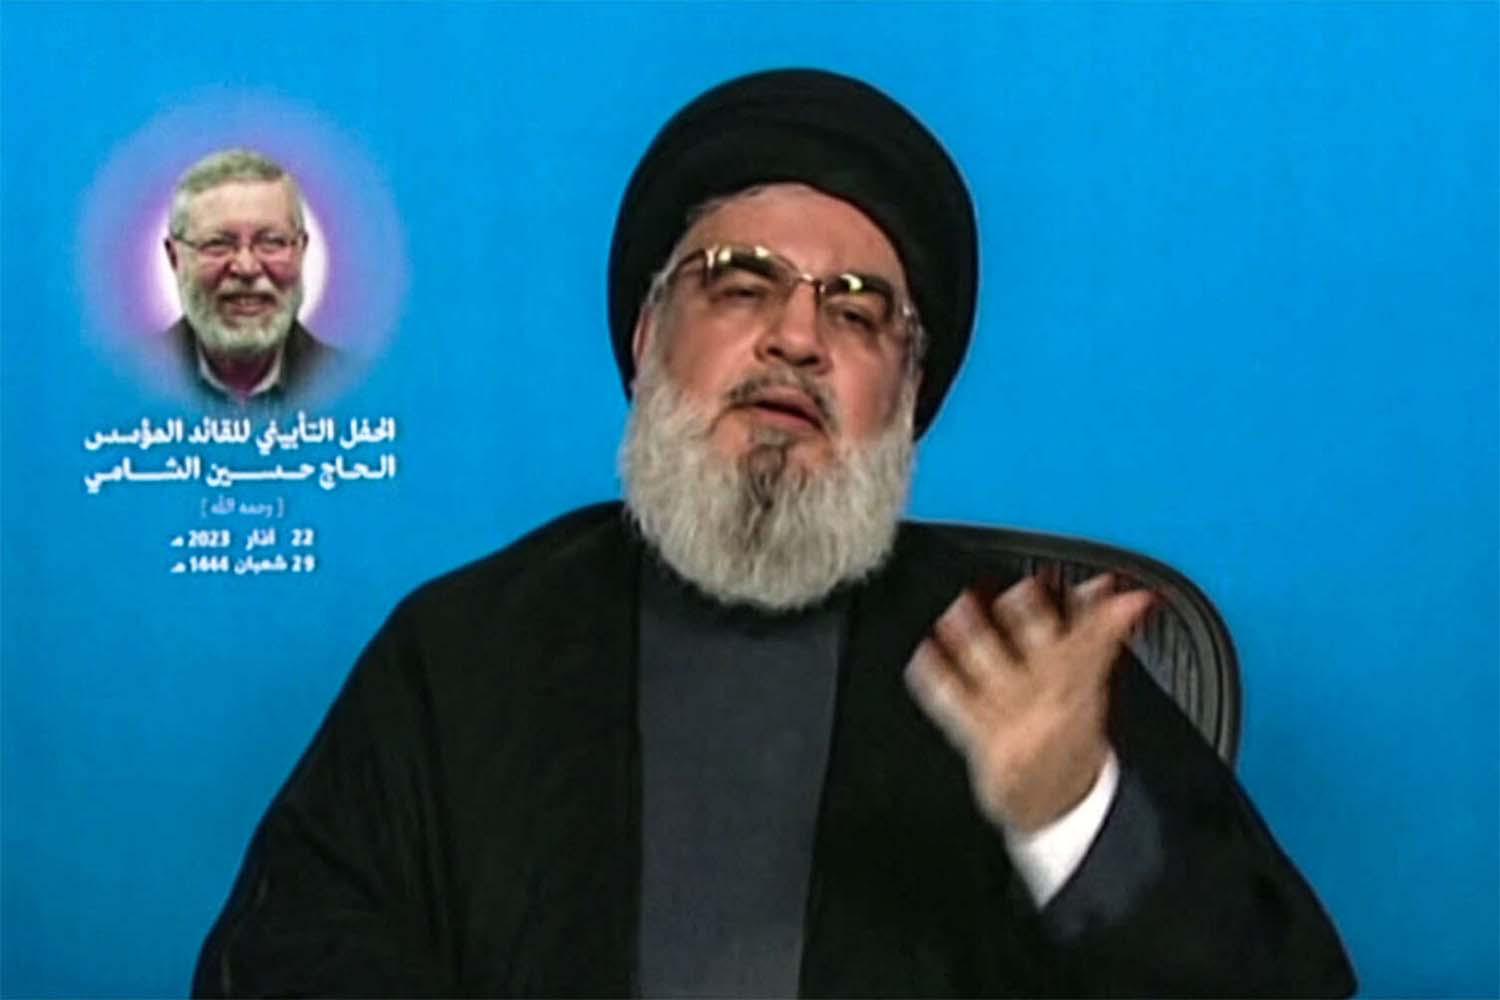 The leader of Lebanon's Iran-backed Hezbollah, Sayyed Hassan Nasrallah